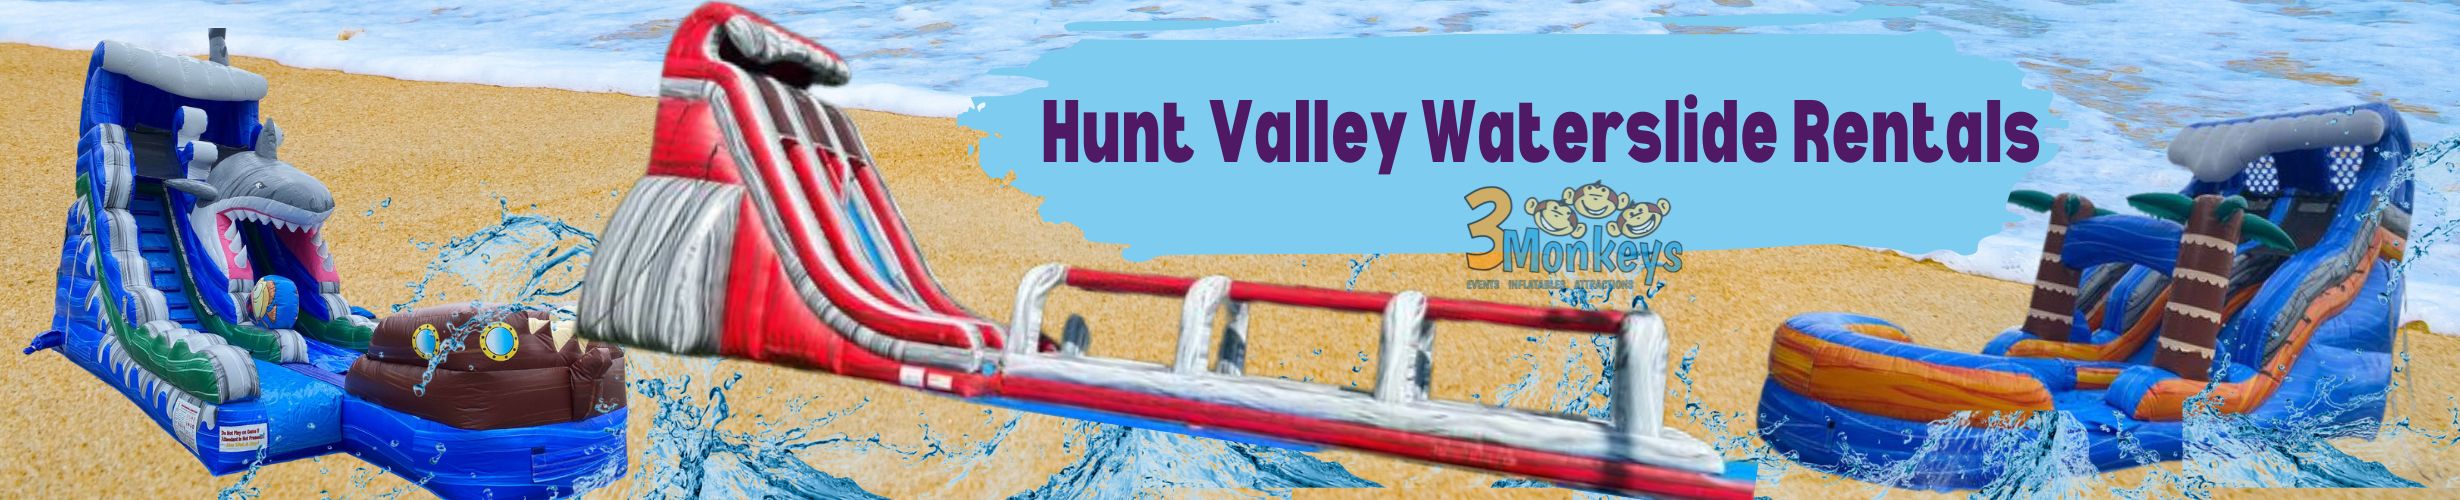 Hunt Valley Water Slide Rentals near me